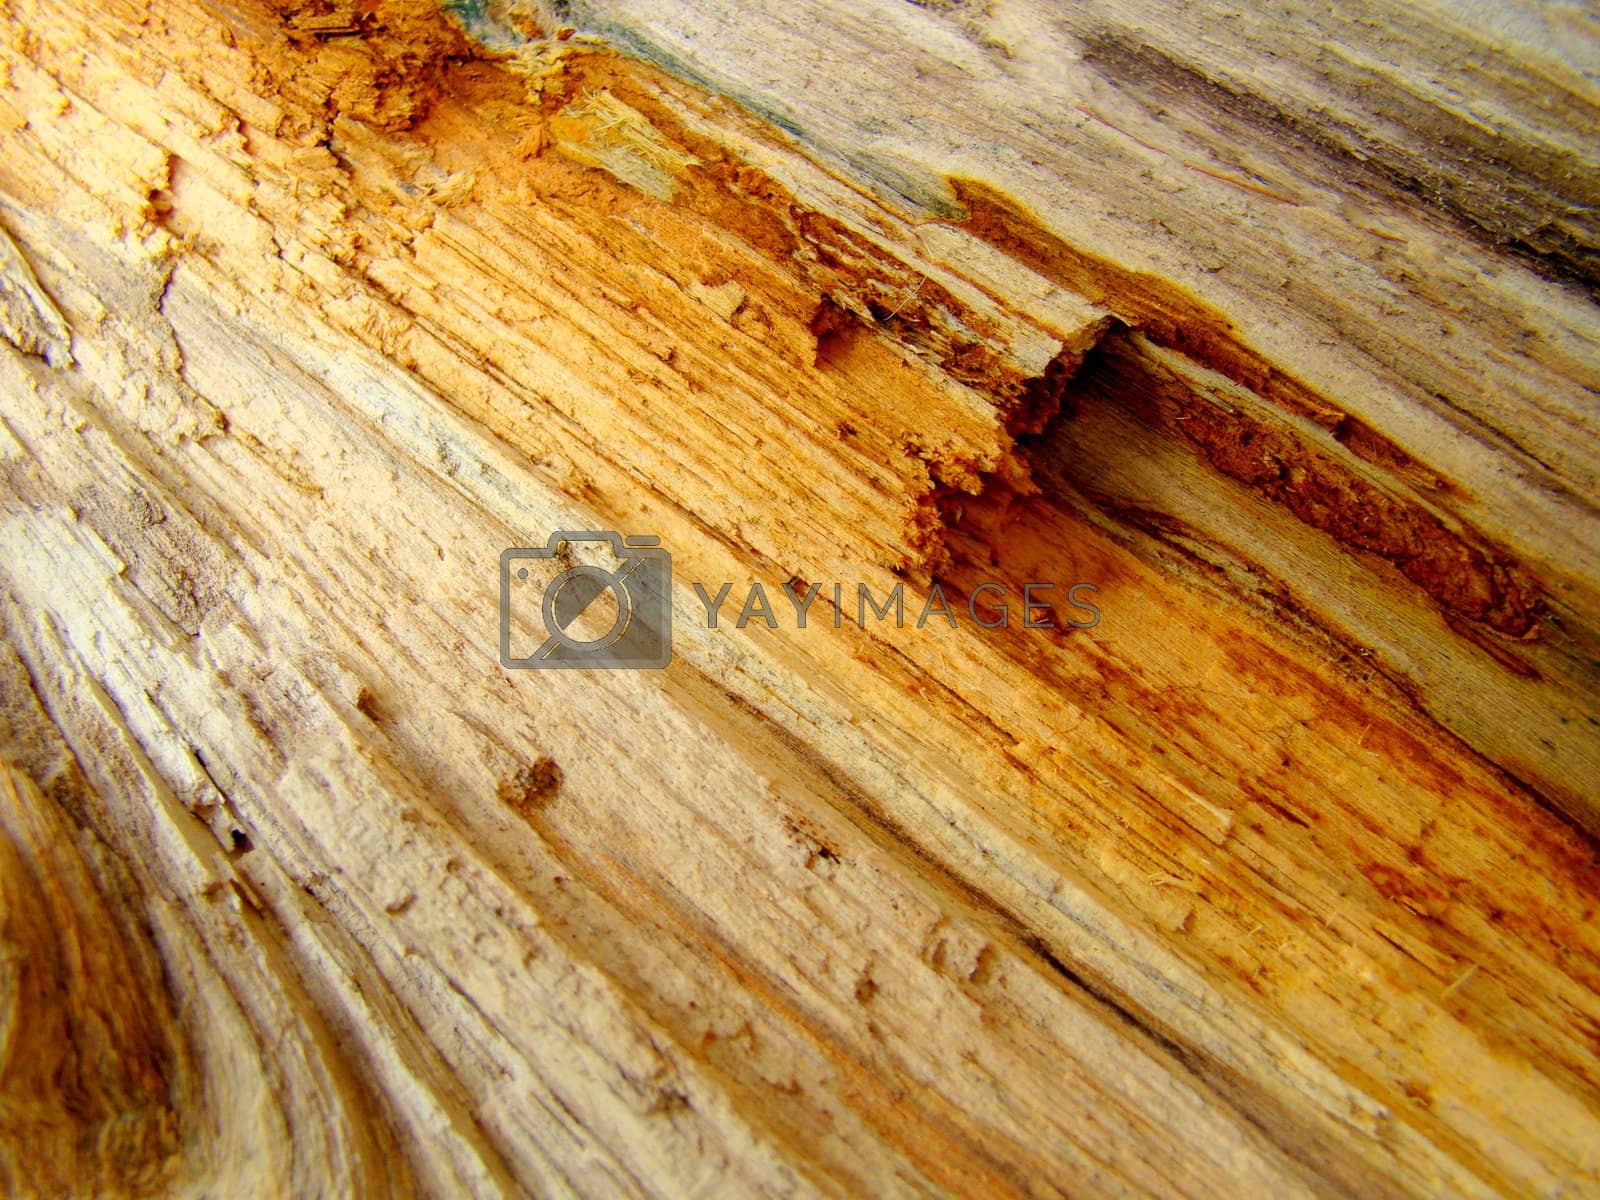 Royalty free image of wood by elvira334